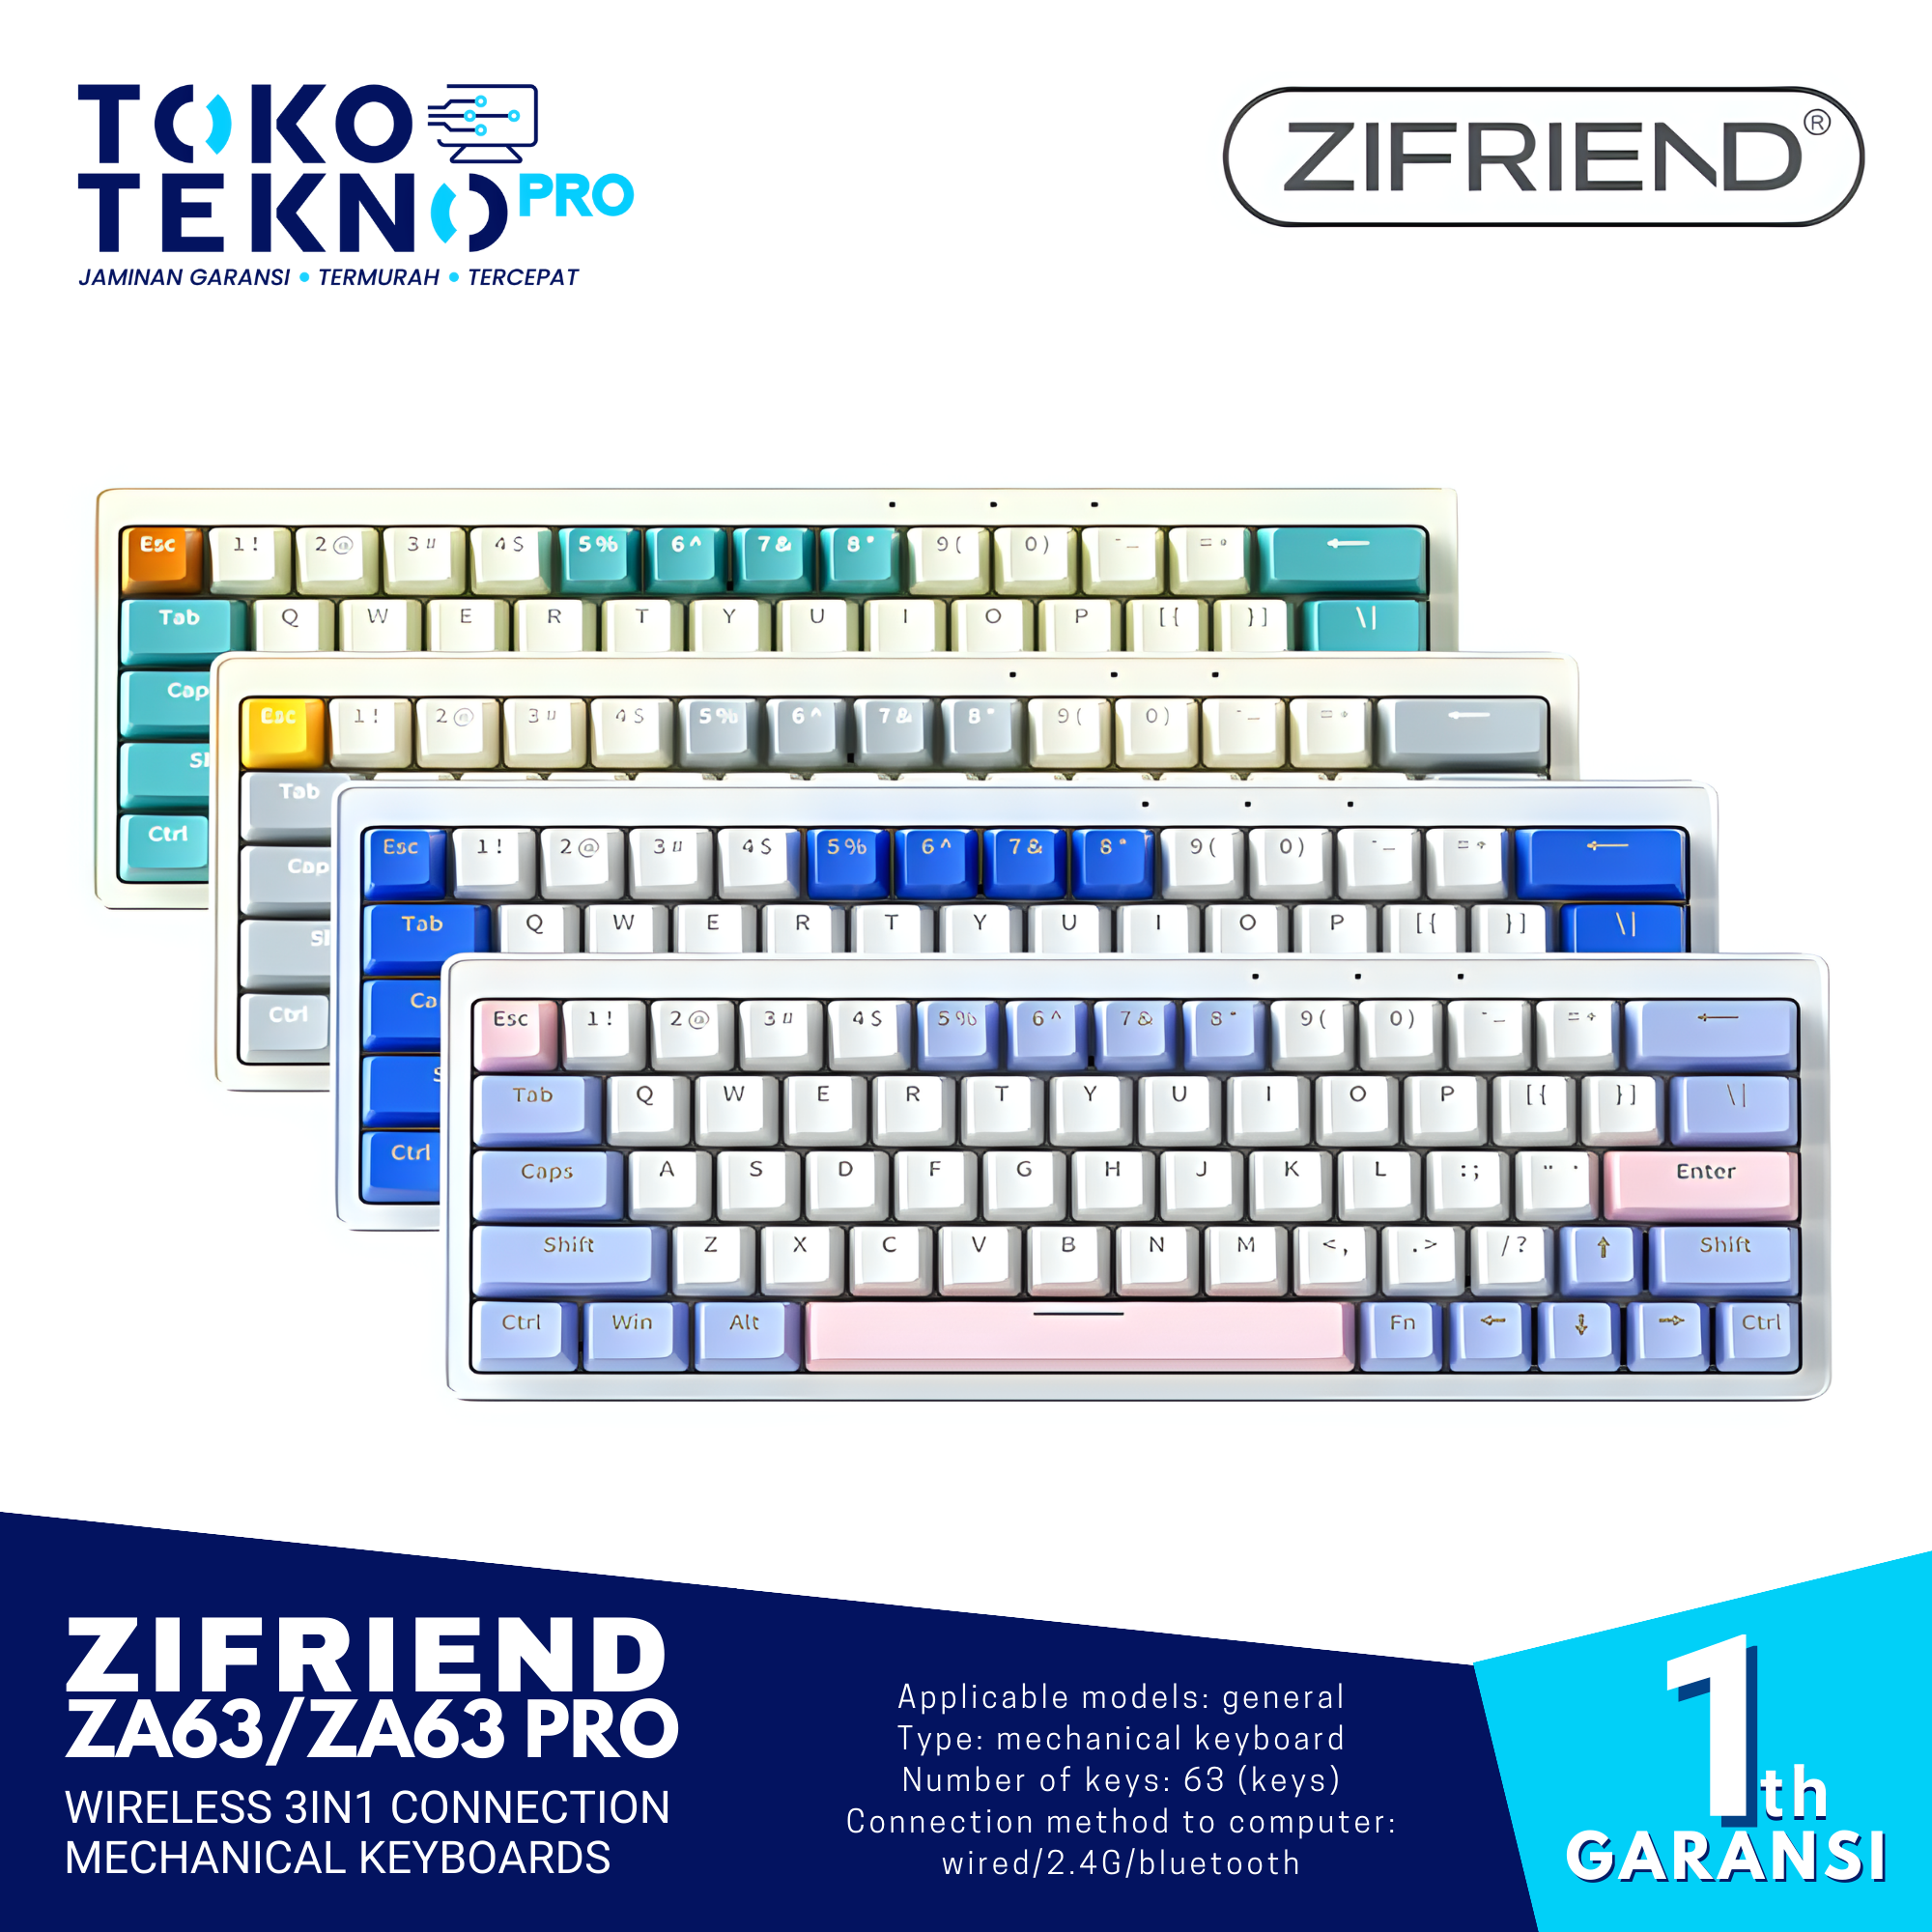 Zifriend ZA63 / ZA63 Pro Wireless 3in1 Connection Mechanical Keyboards